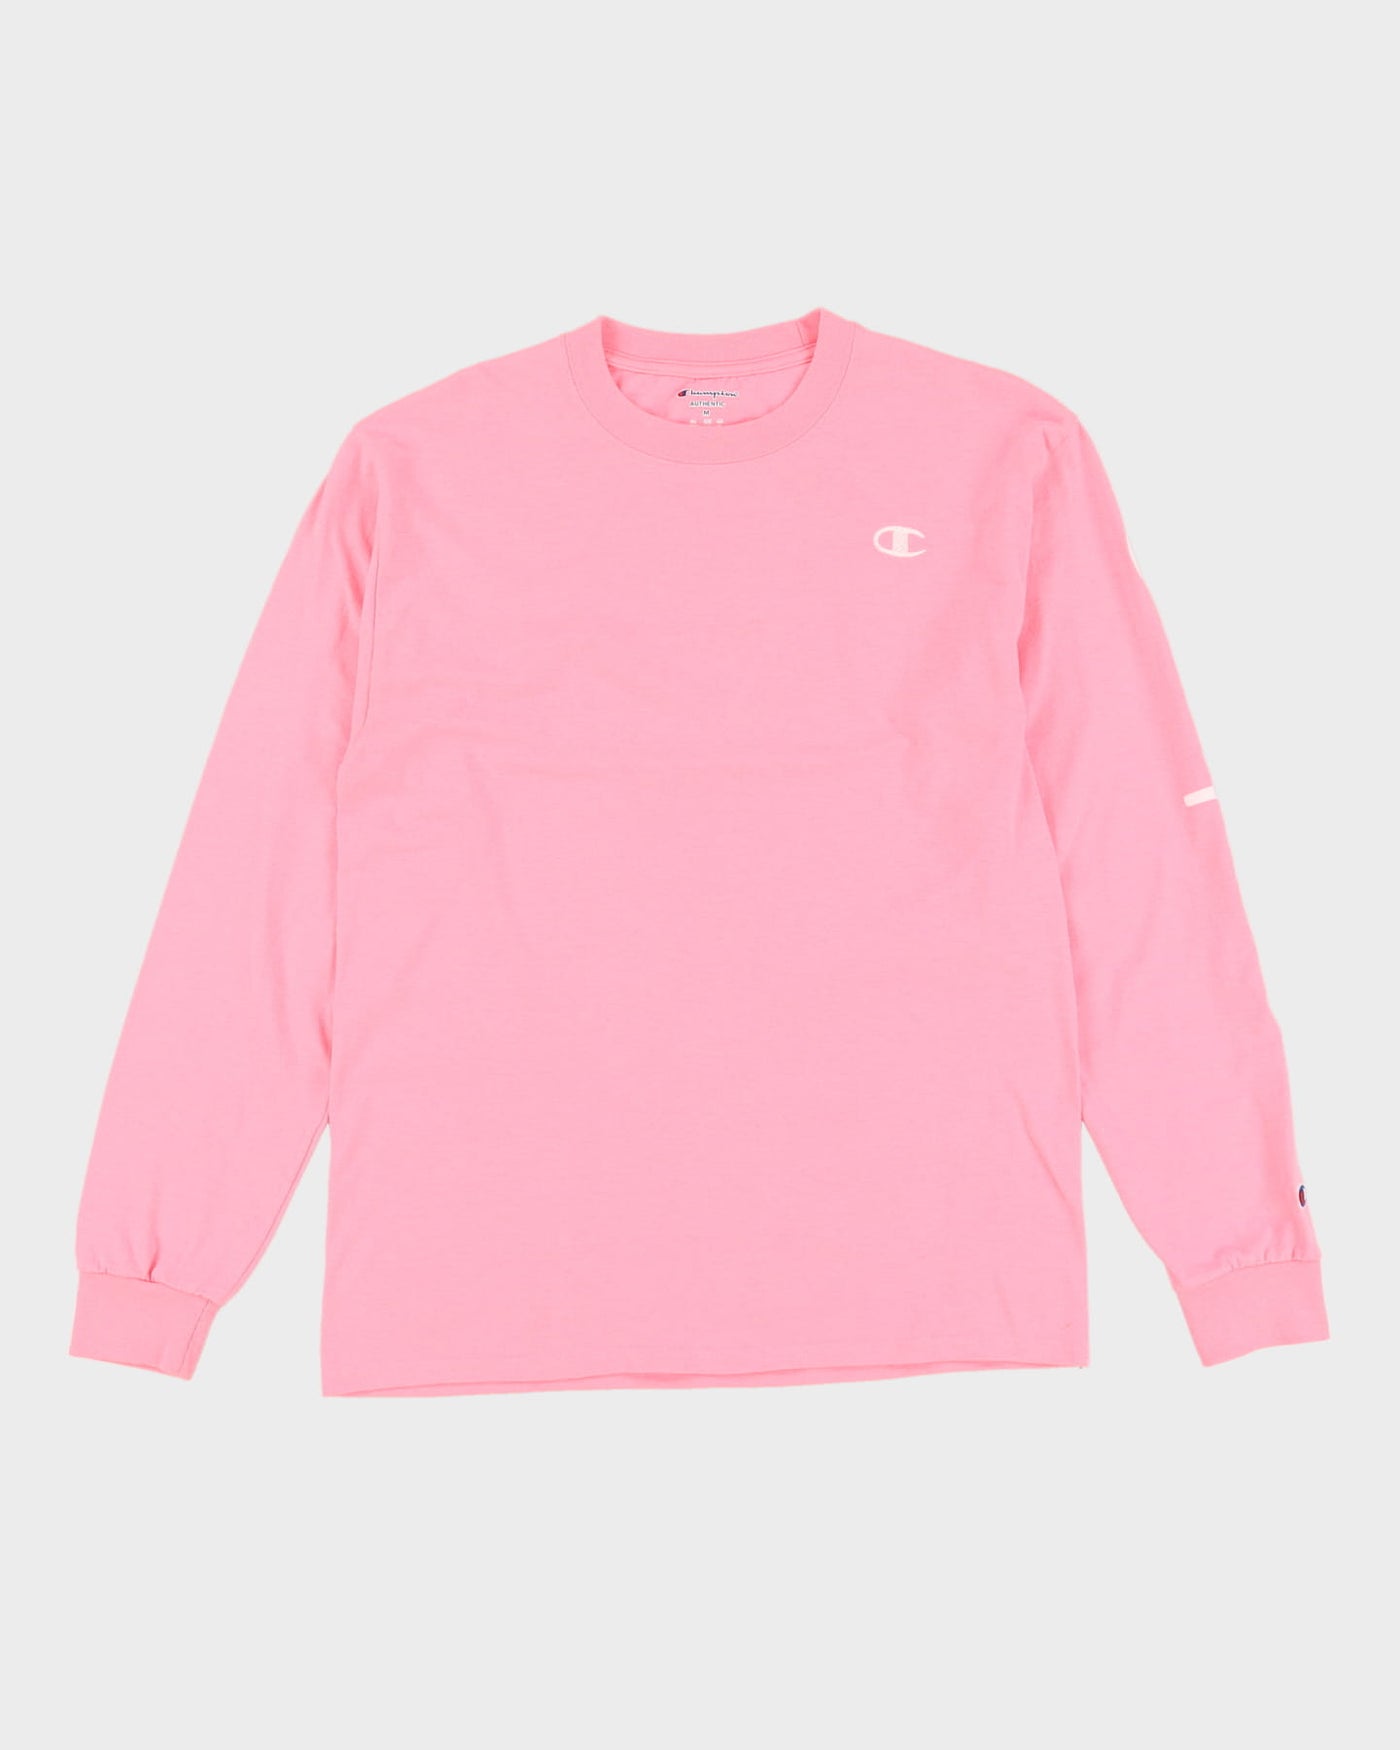 Champion Pink Long Sleeve T-Shirt - M